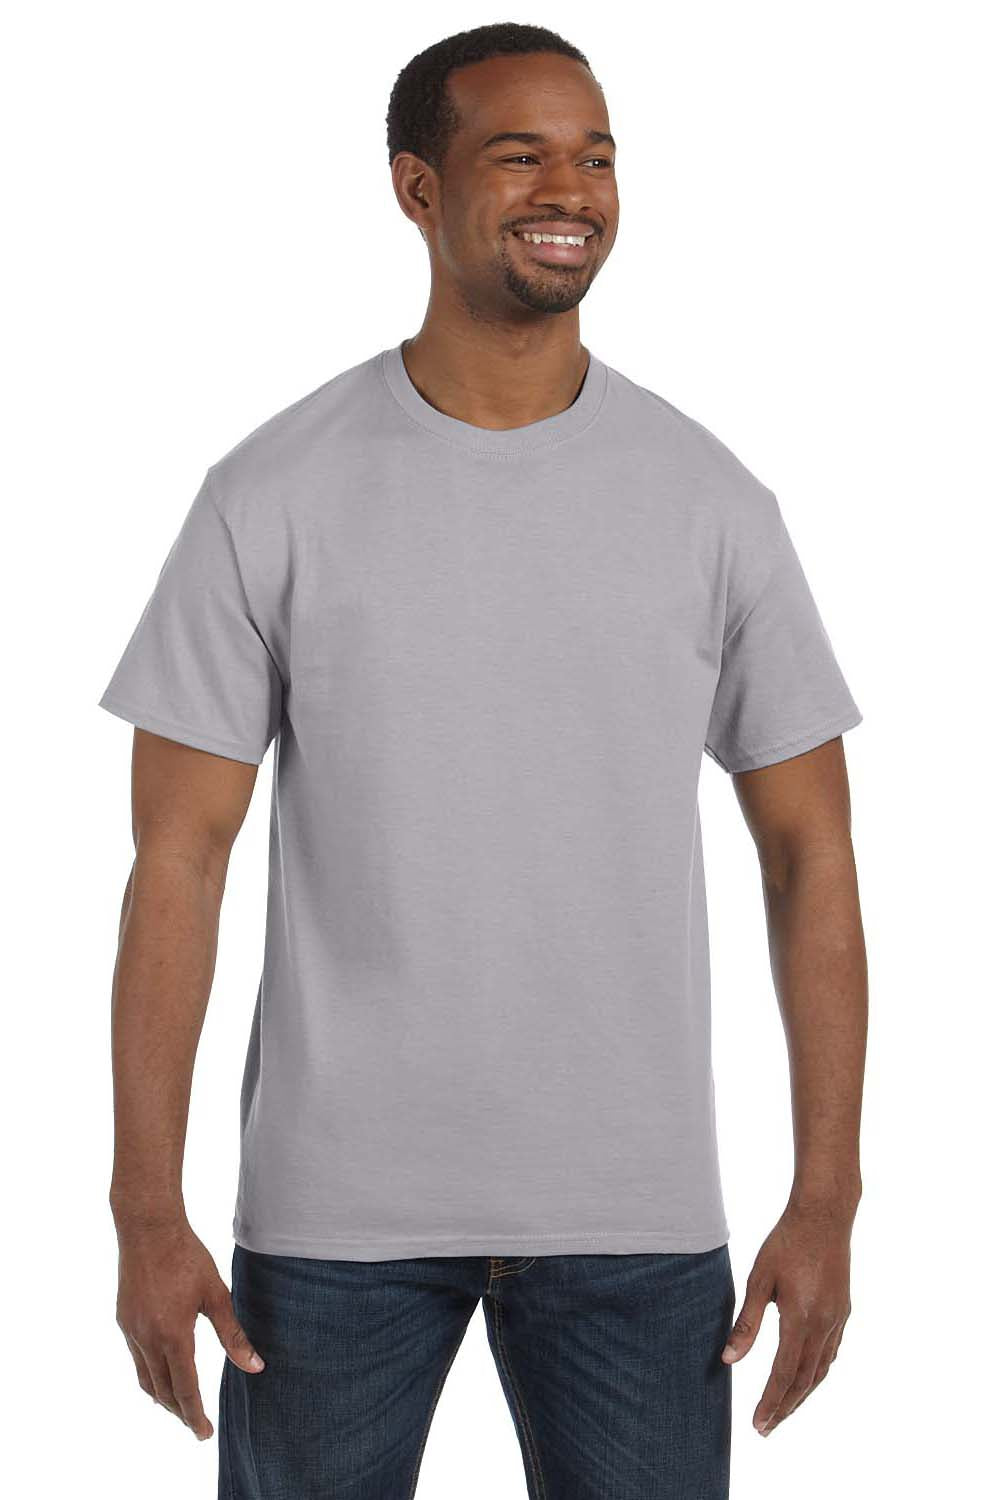 Hanes 5250T Mens ComfortSoft Short Sleeve Crewneck T-Shirt Oxford Grey Front